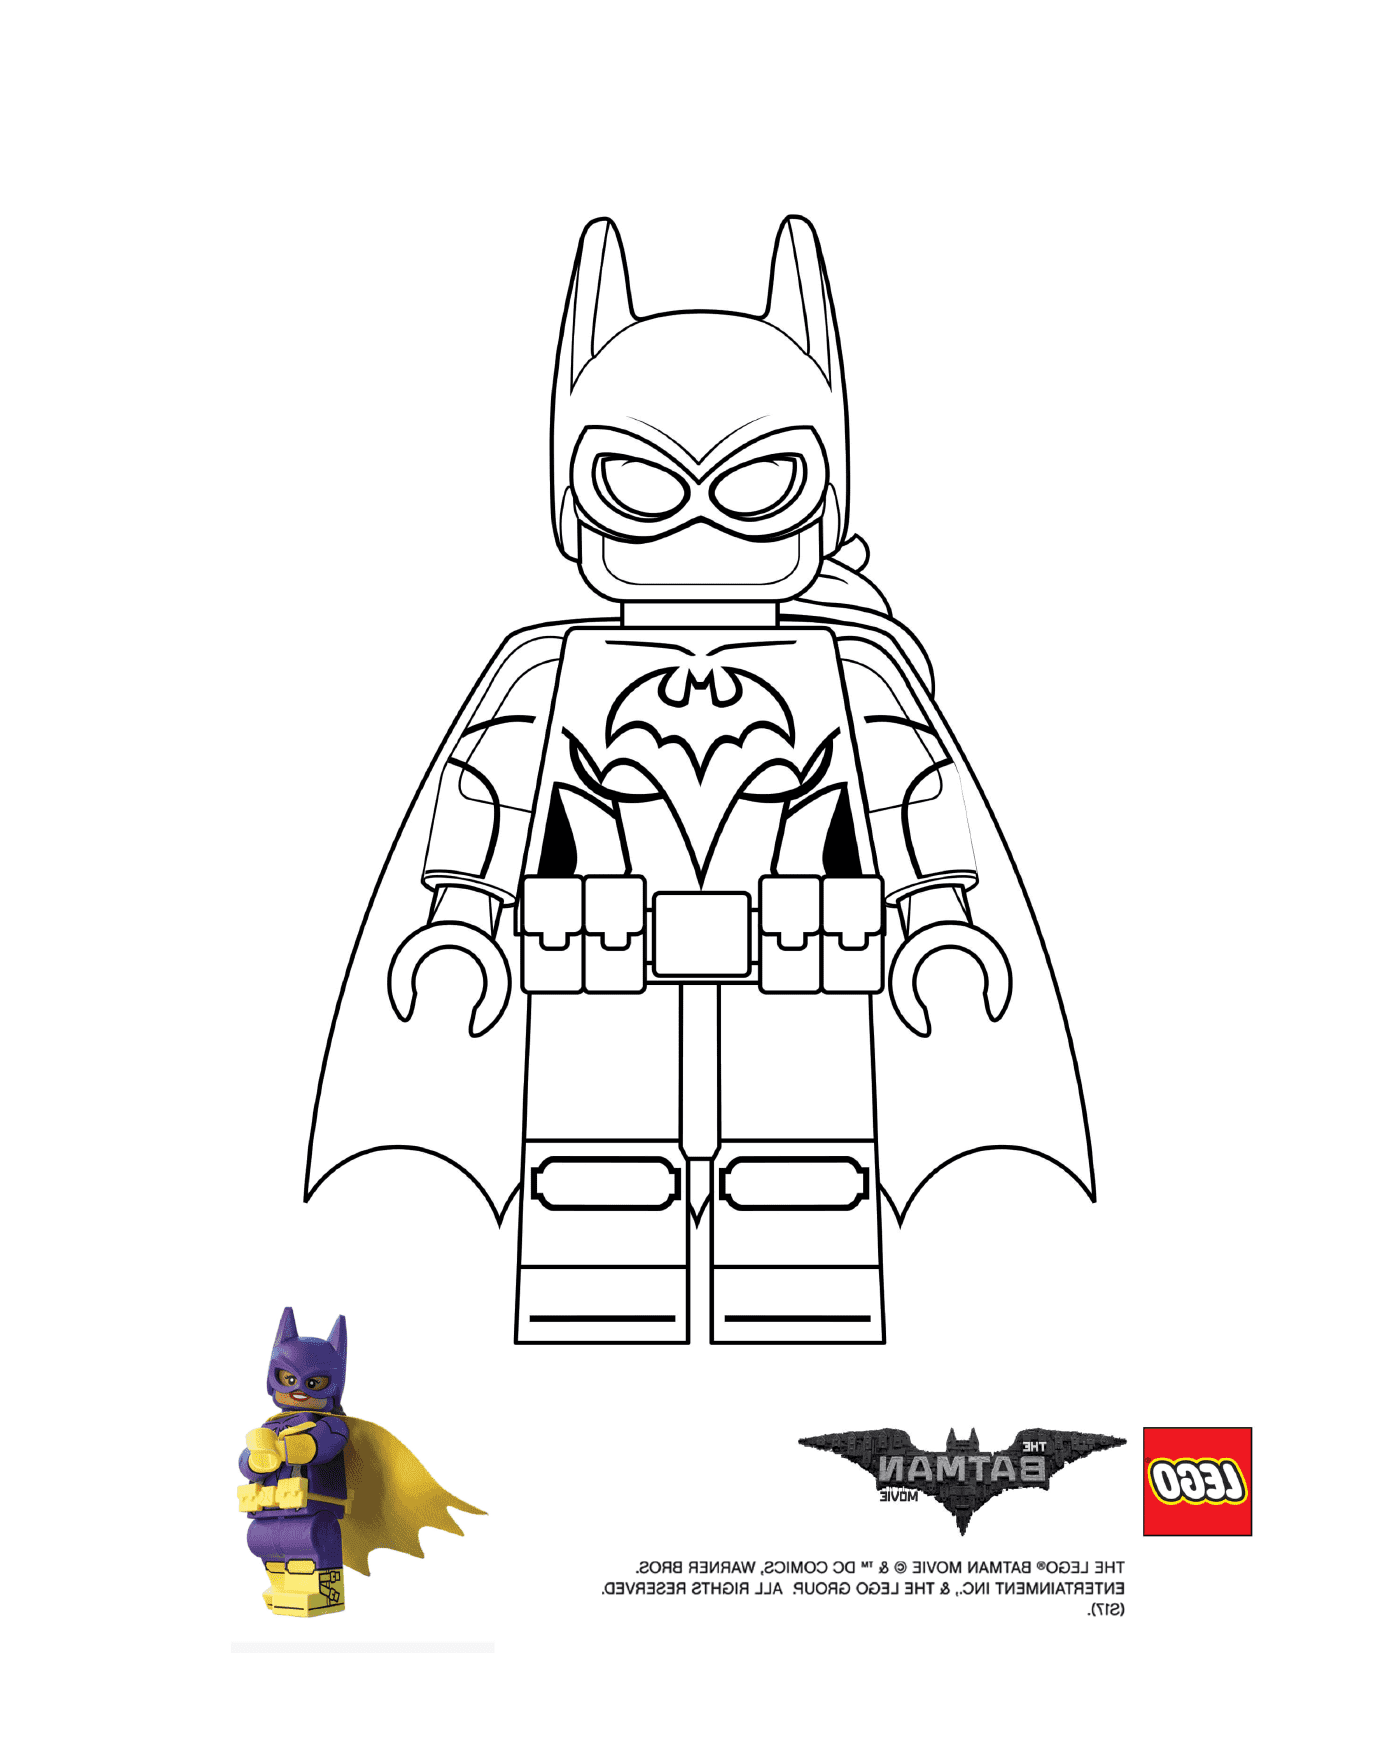  Batgirl Lego from the movie Lego Batman 